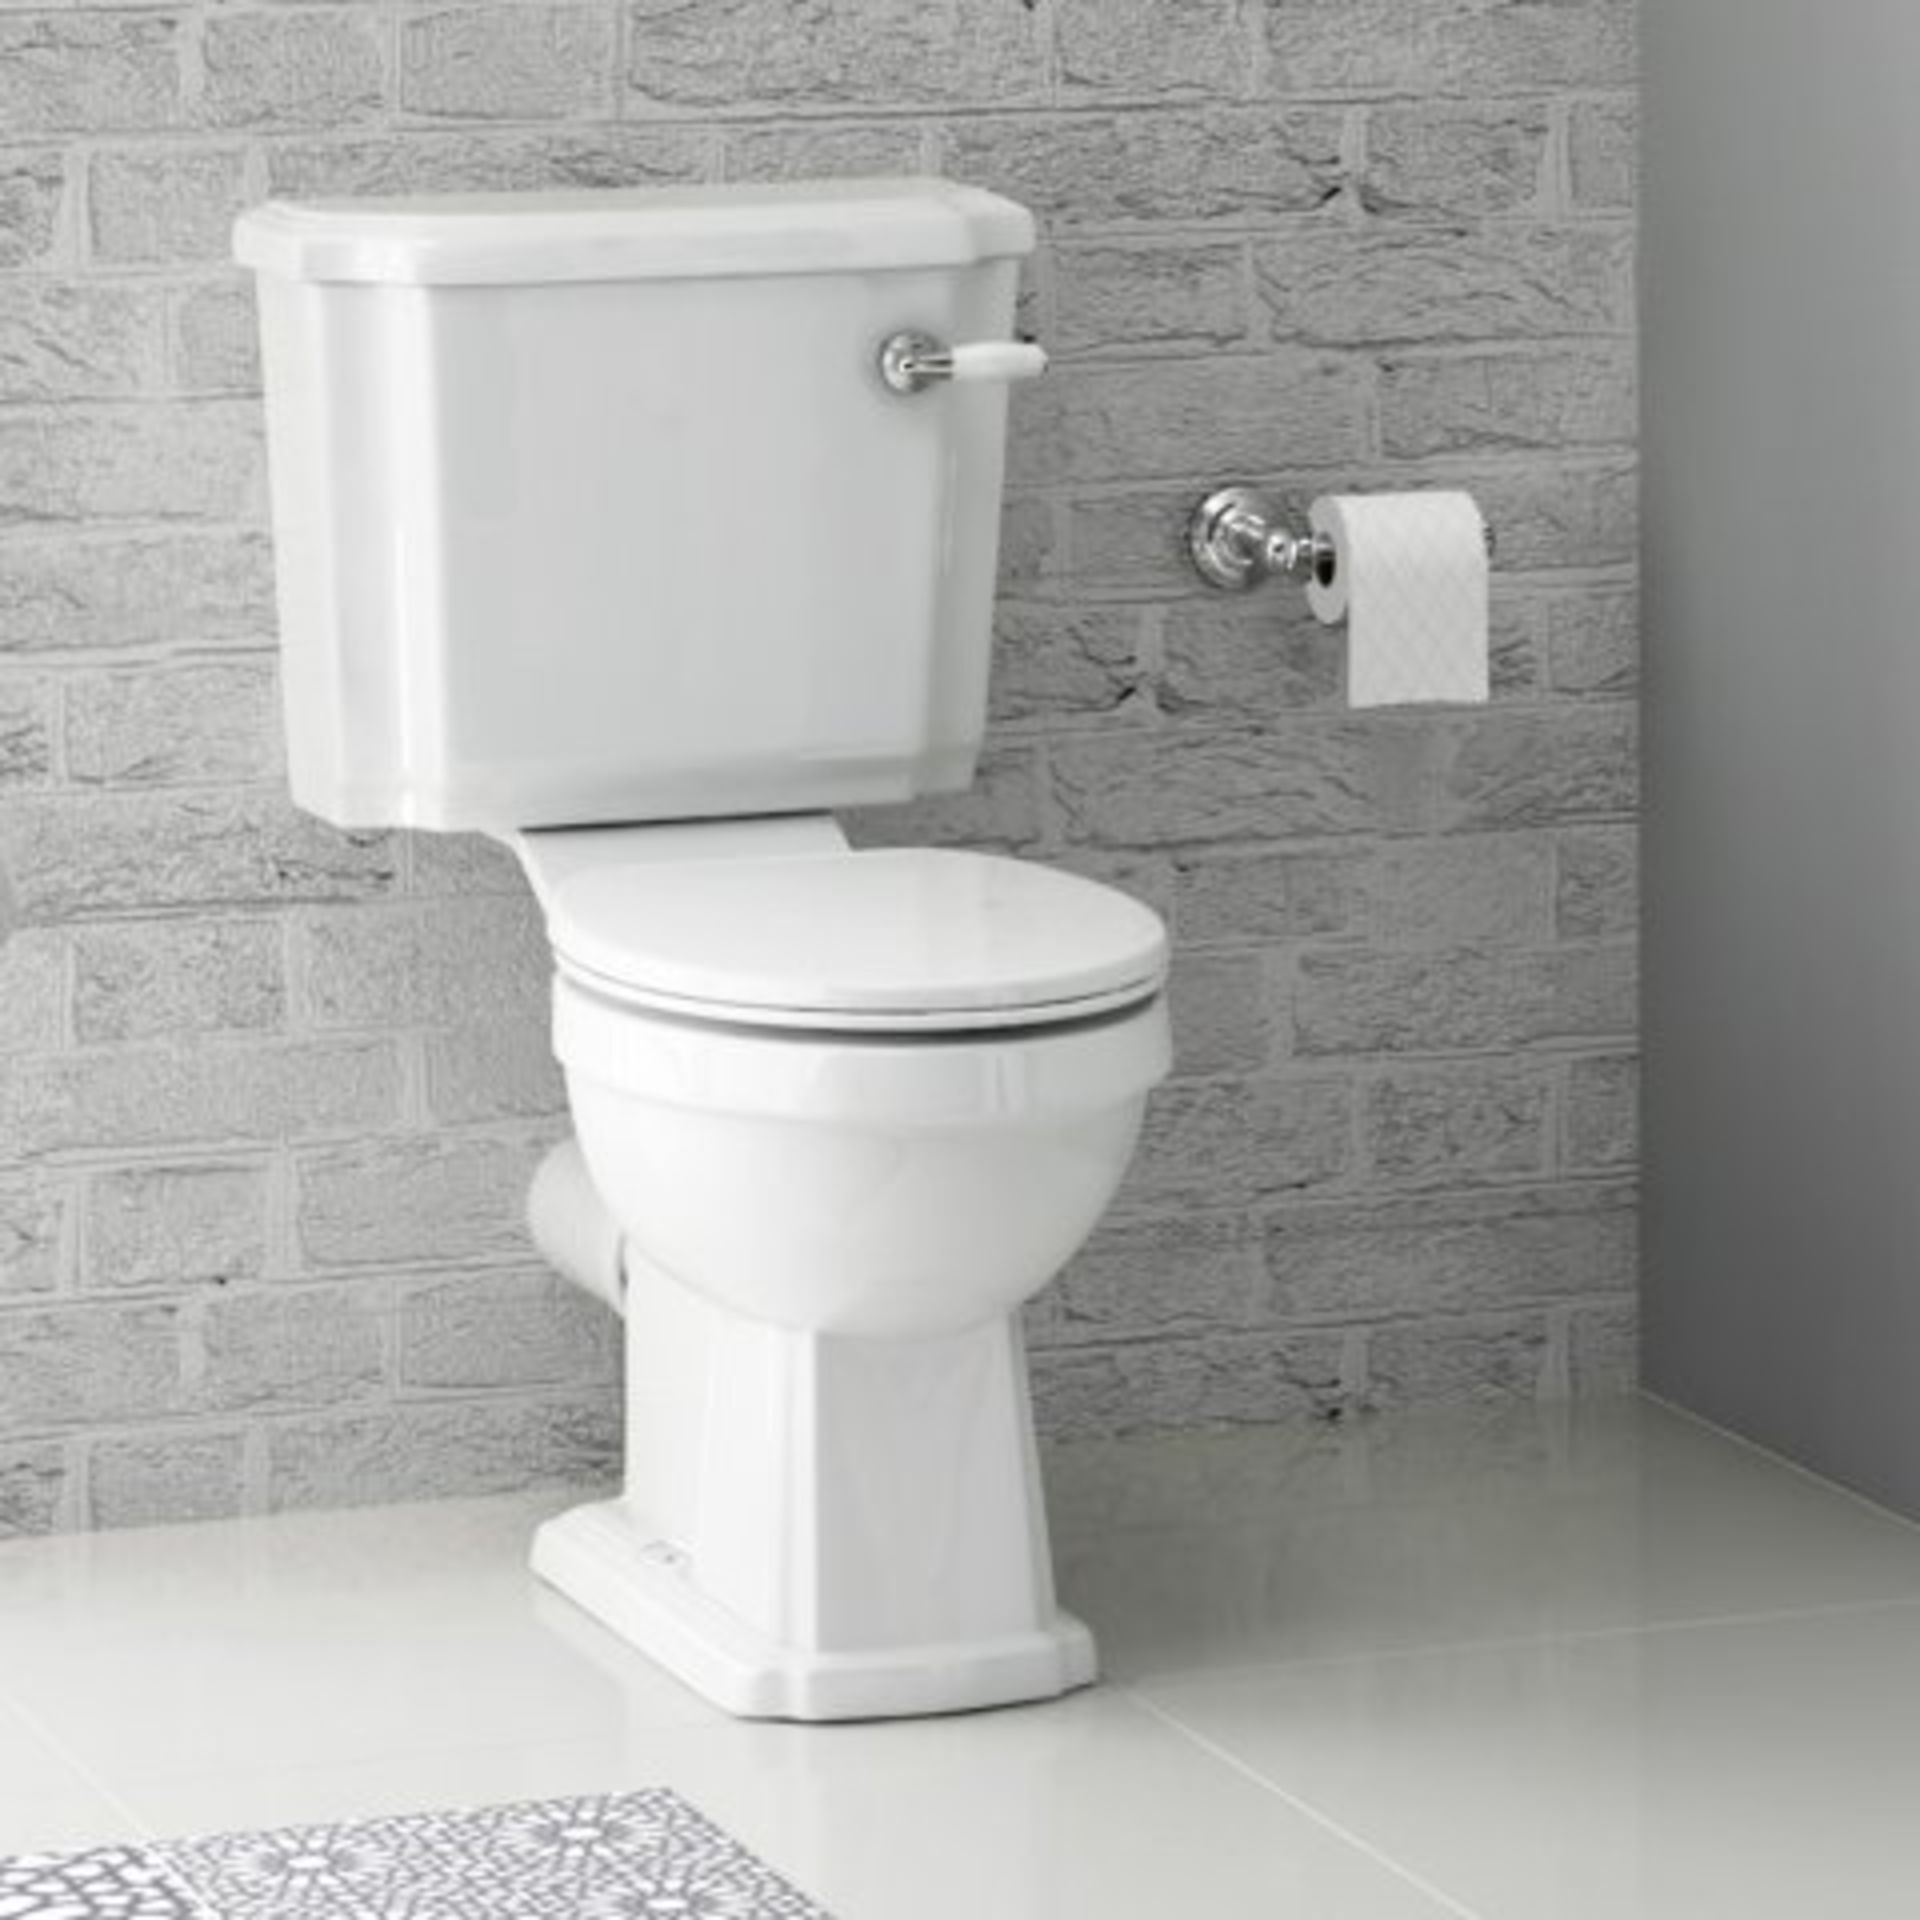 (I19) Georgia II II Traditional Close Coupled Toilet & Cistern - White Seat This classic close